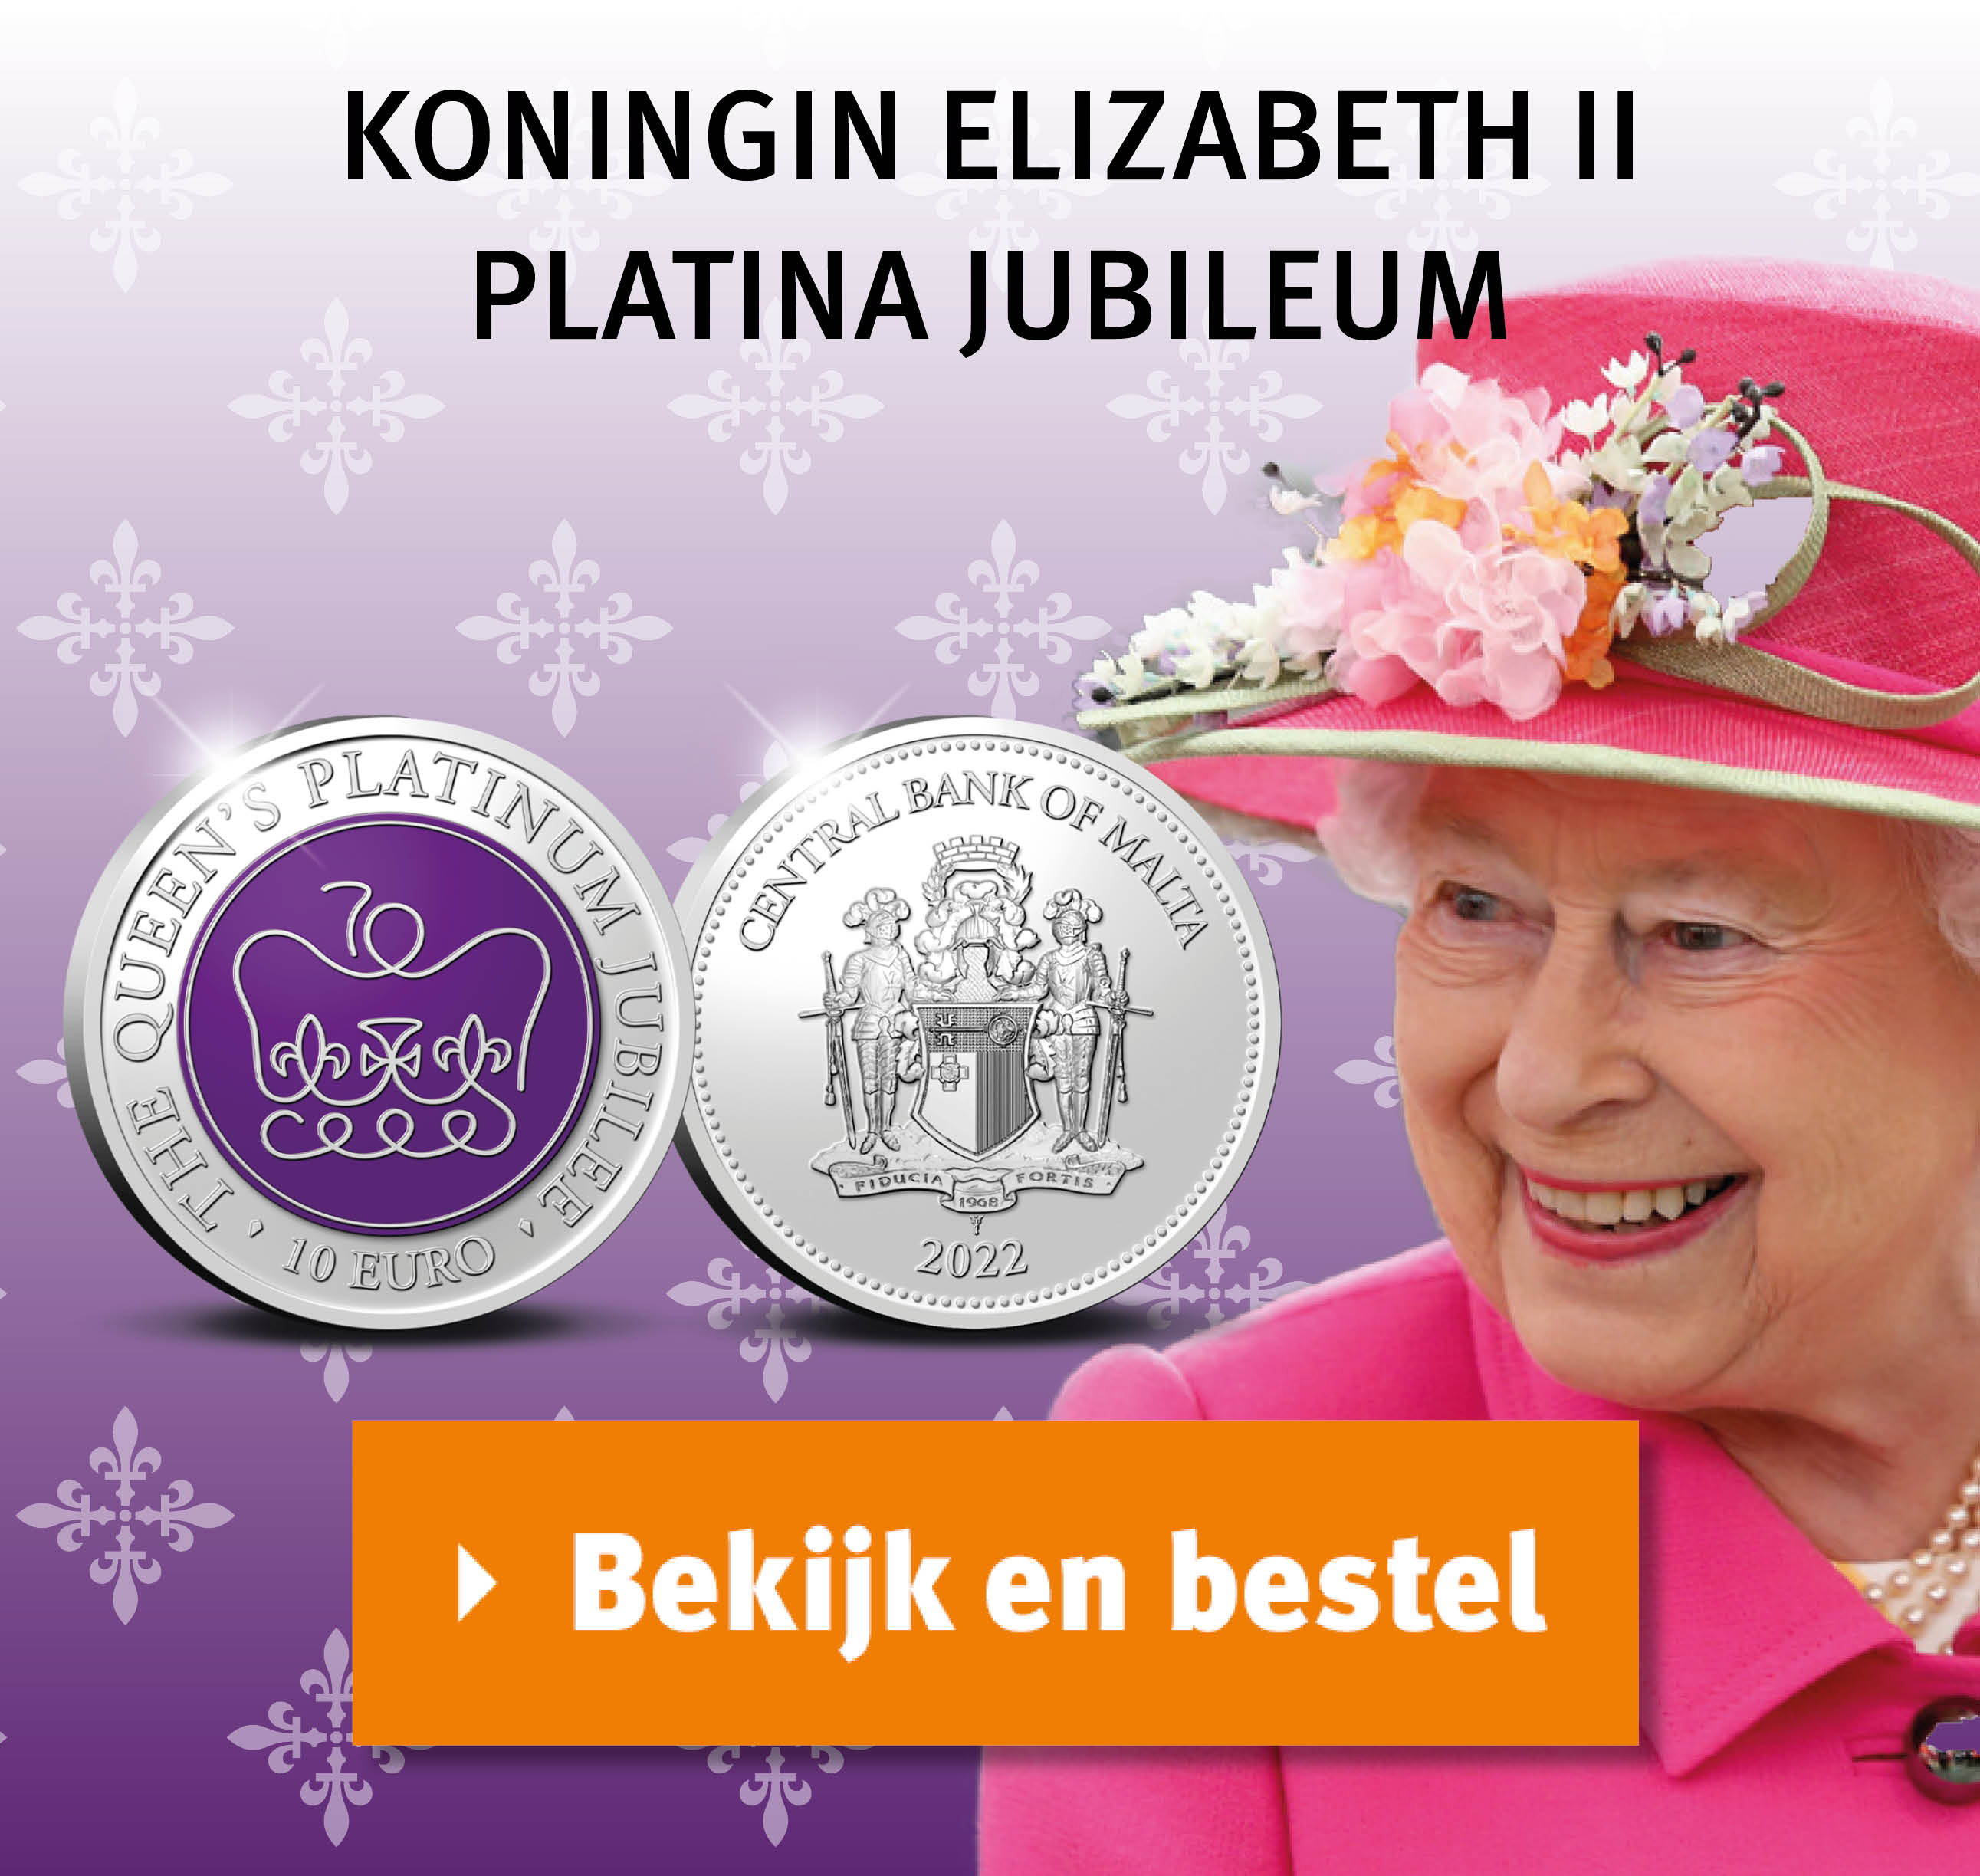 Bekijk en bestel: Koningin Elizabeth II Platina Jubileum